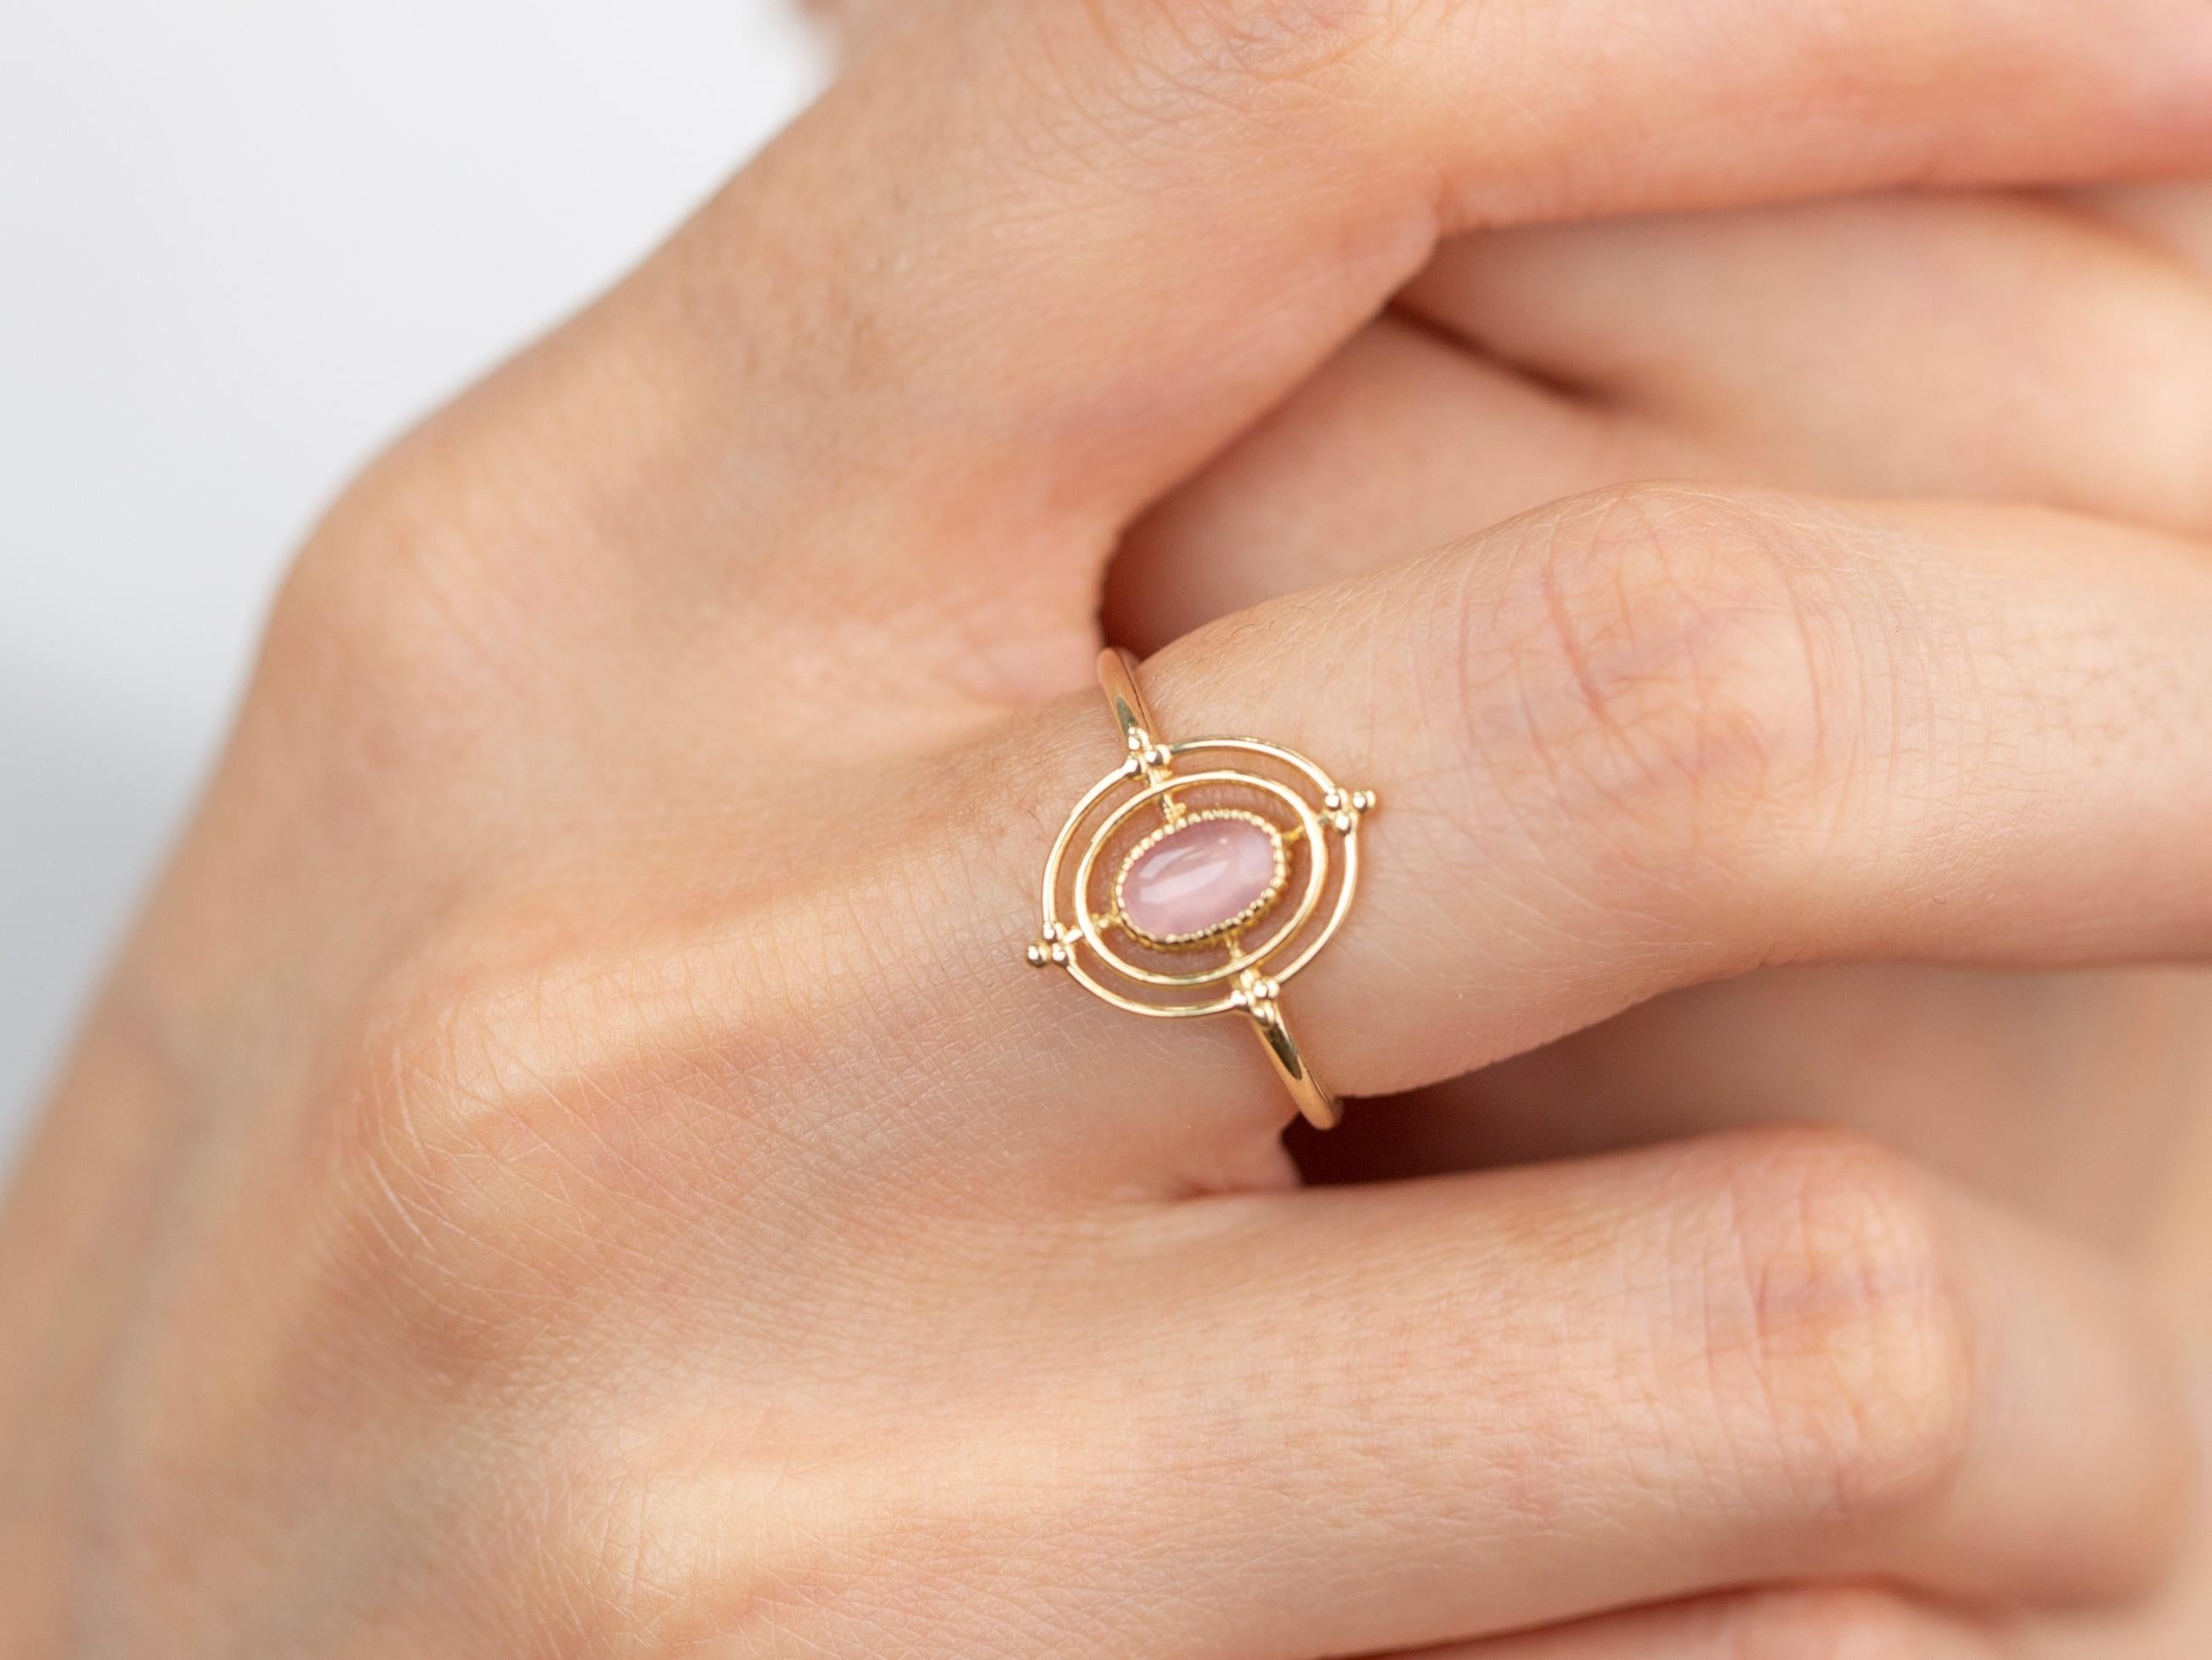 For Sale:  14K Gold Vintage Style Oval Cut Pink Quartz Ring 2